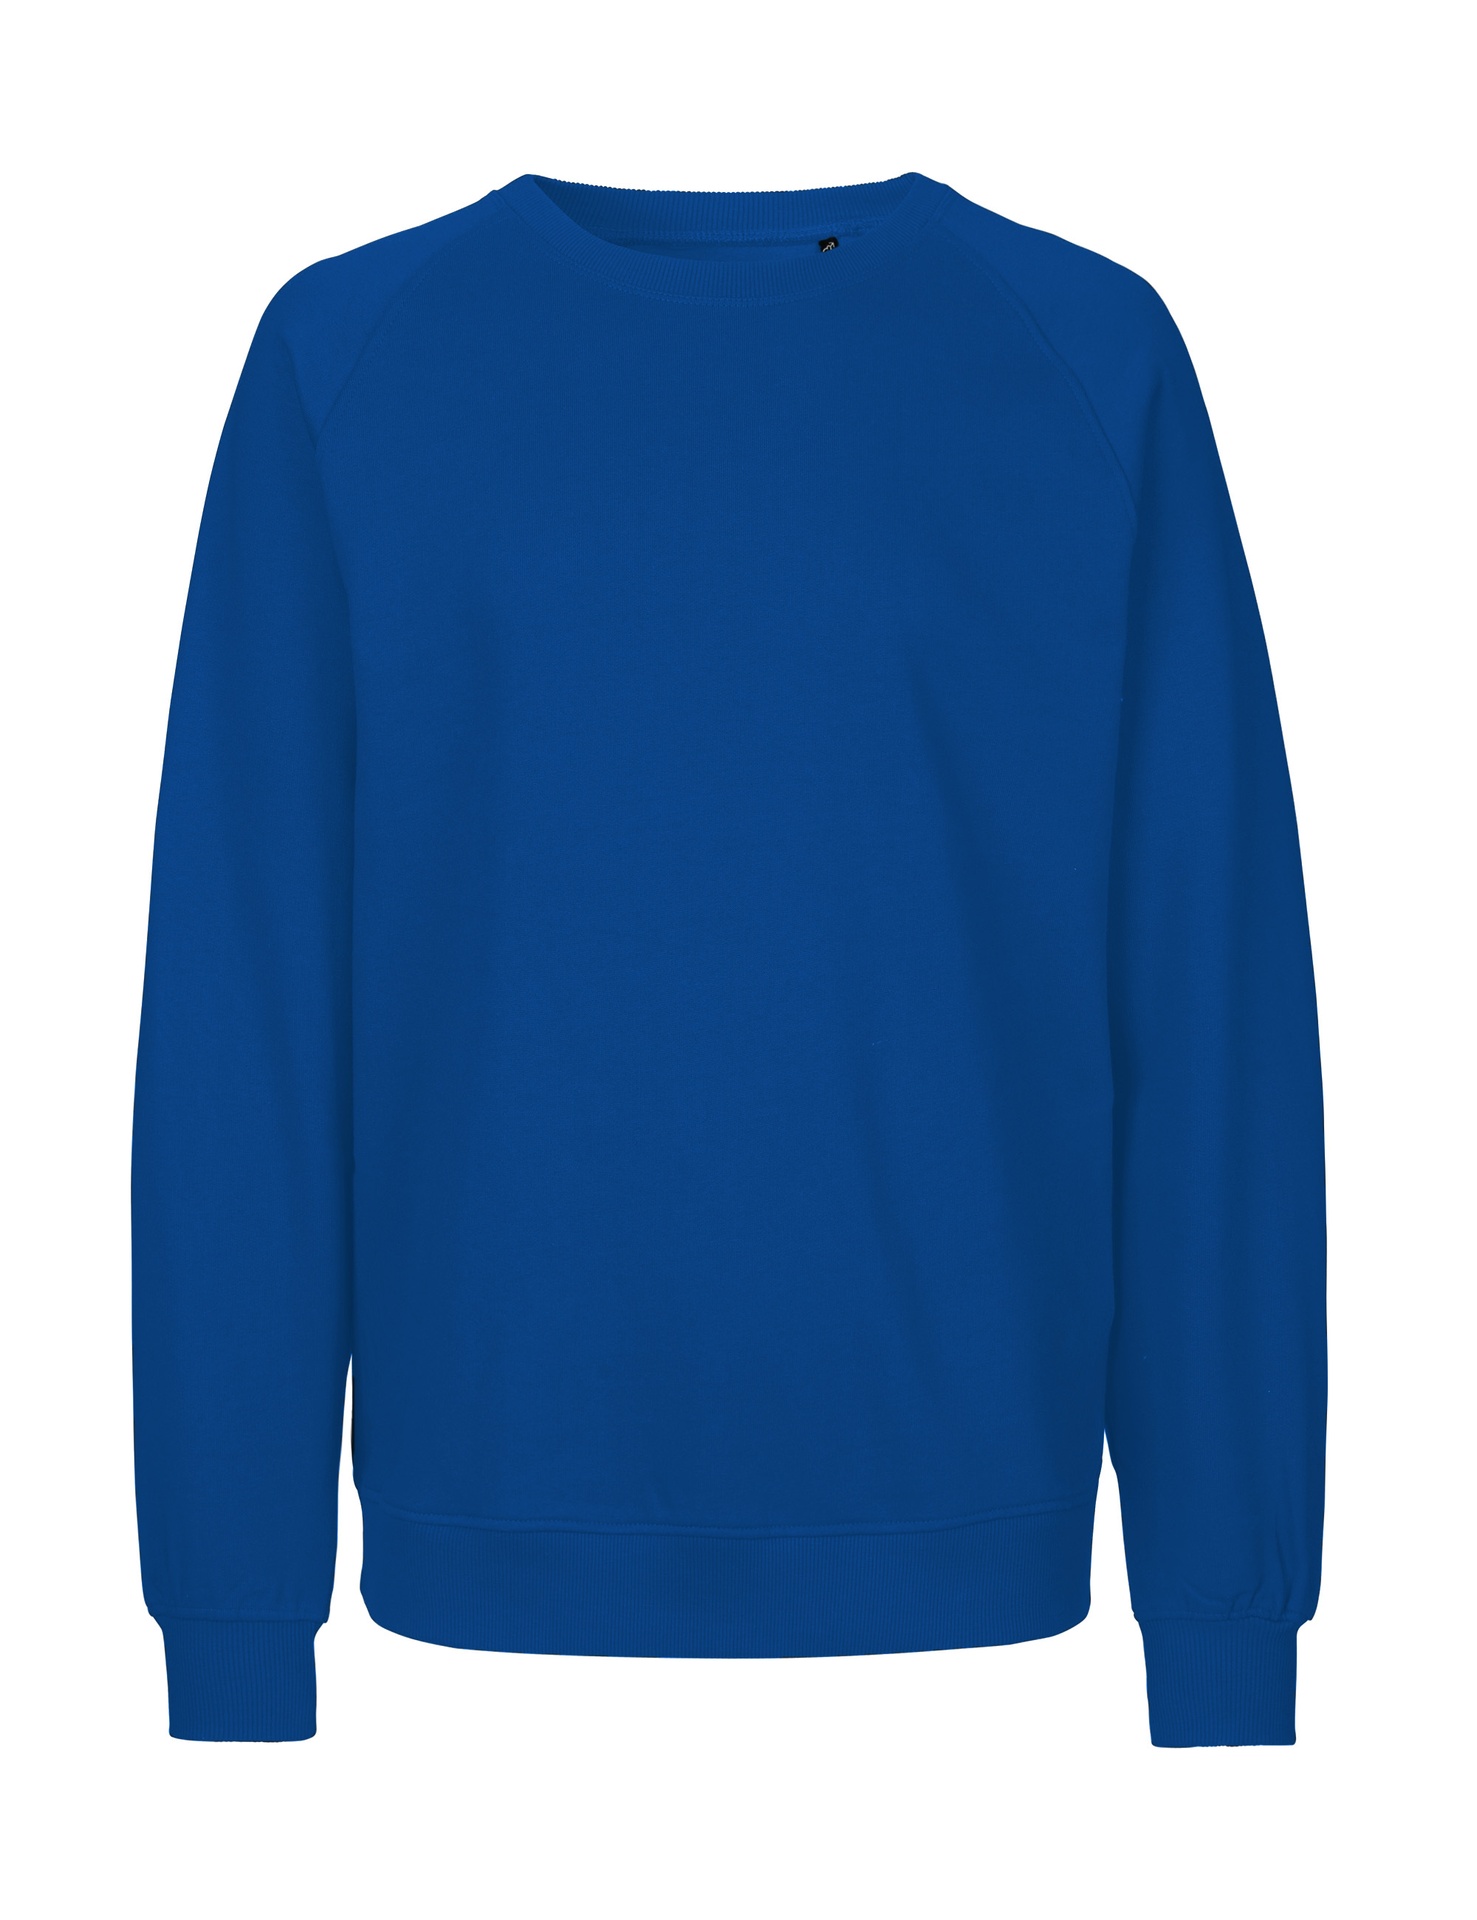 [PR/02861] Unisex Sweatshirt (Royal 51, M)